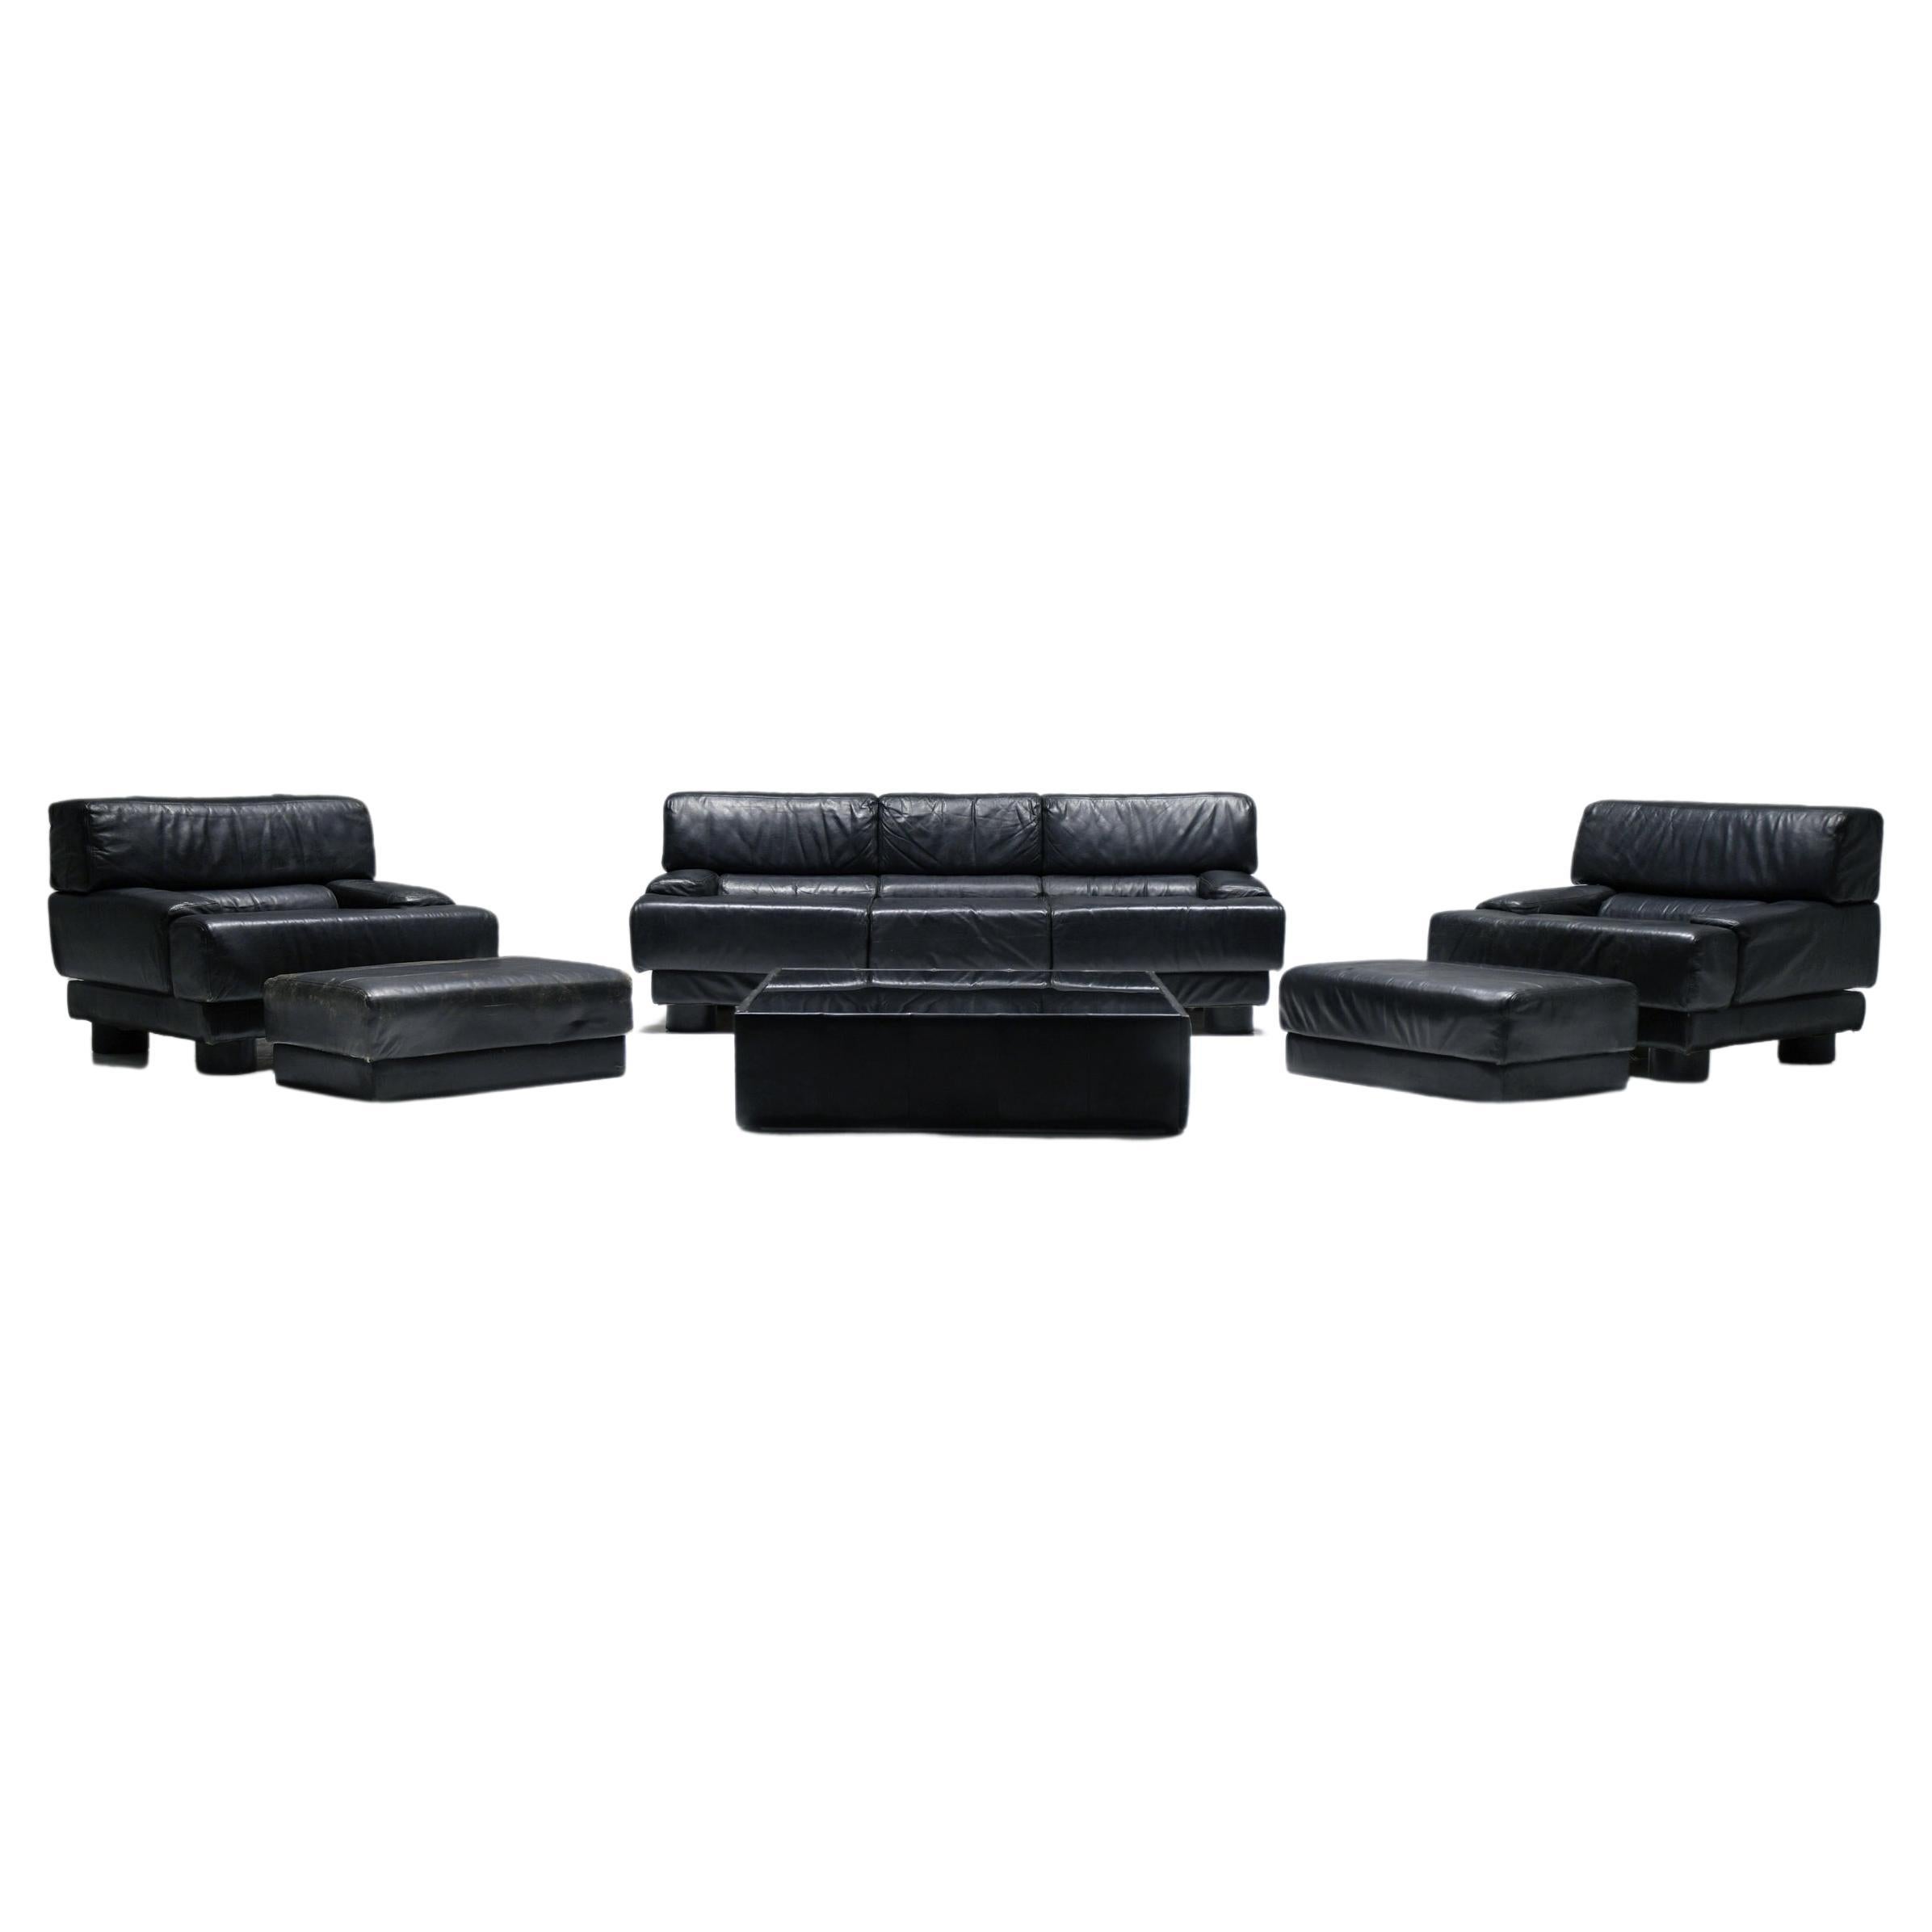 Stunning Percival Lafer sofa set in original black leather - Lafer S.A. - Brazil